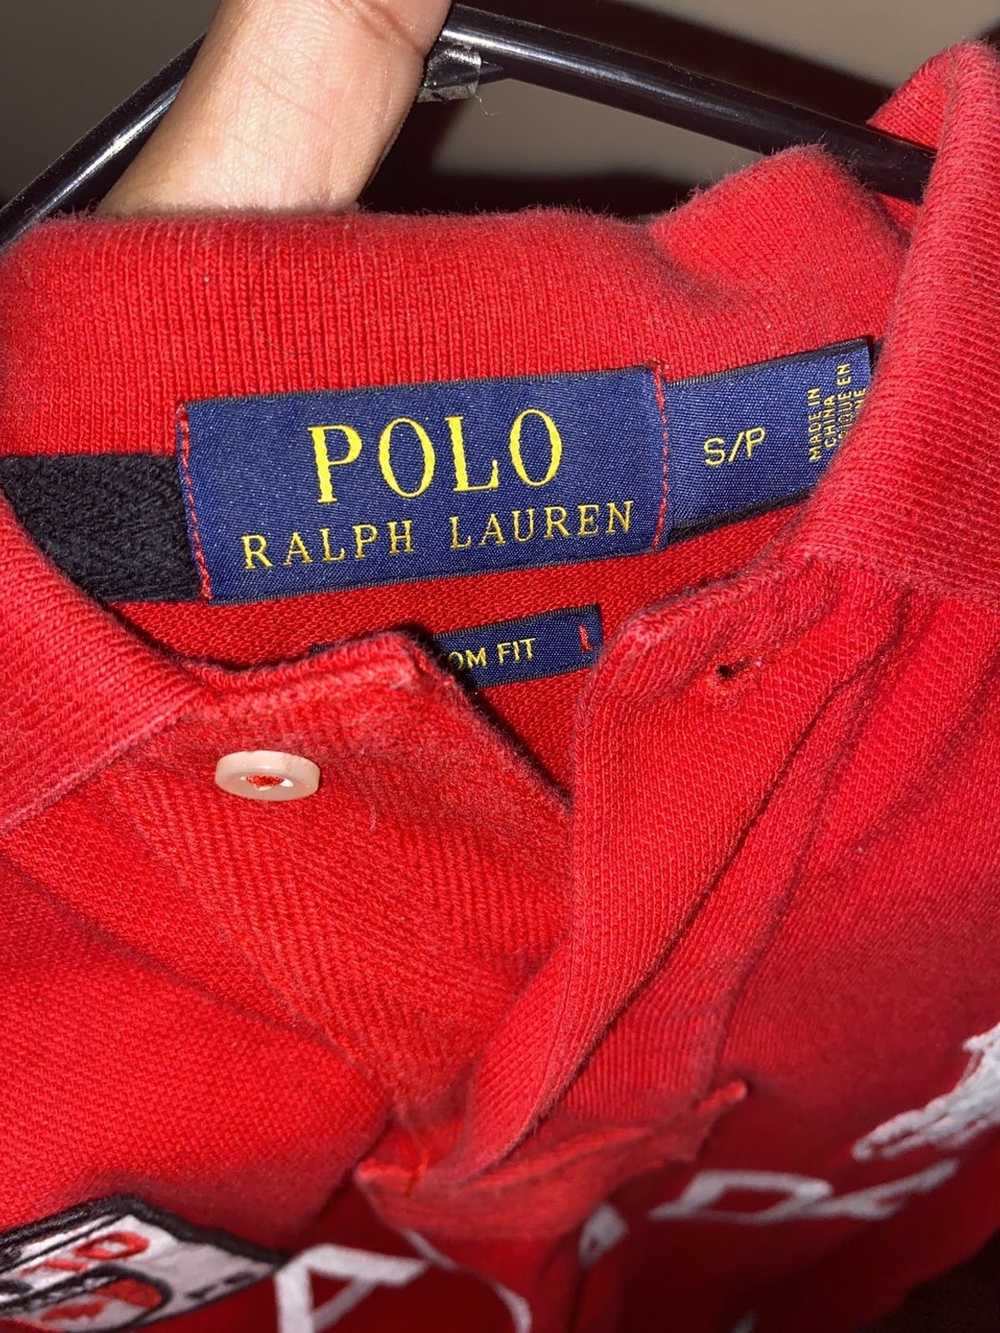 Polo Ralph Lauren vintage polo ralph lauren - image 6